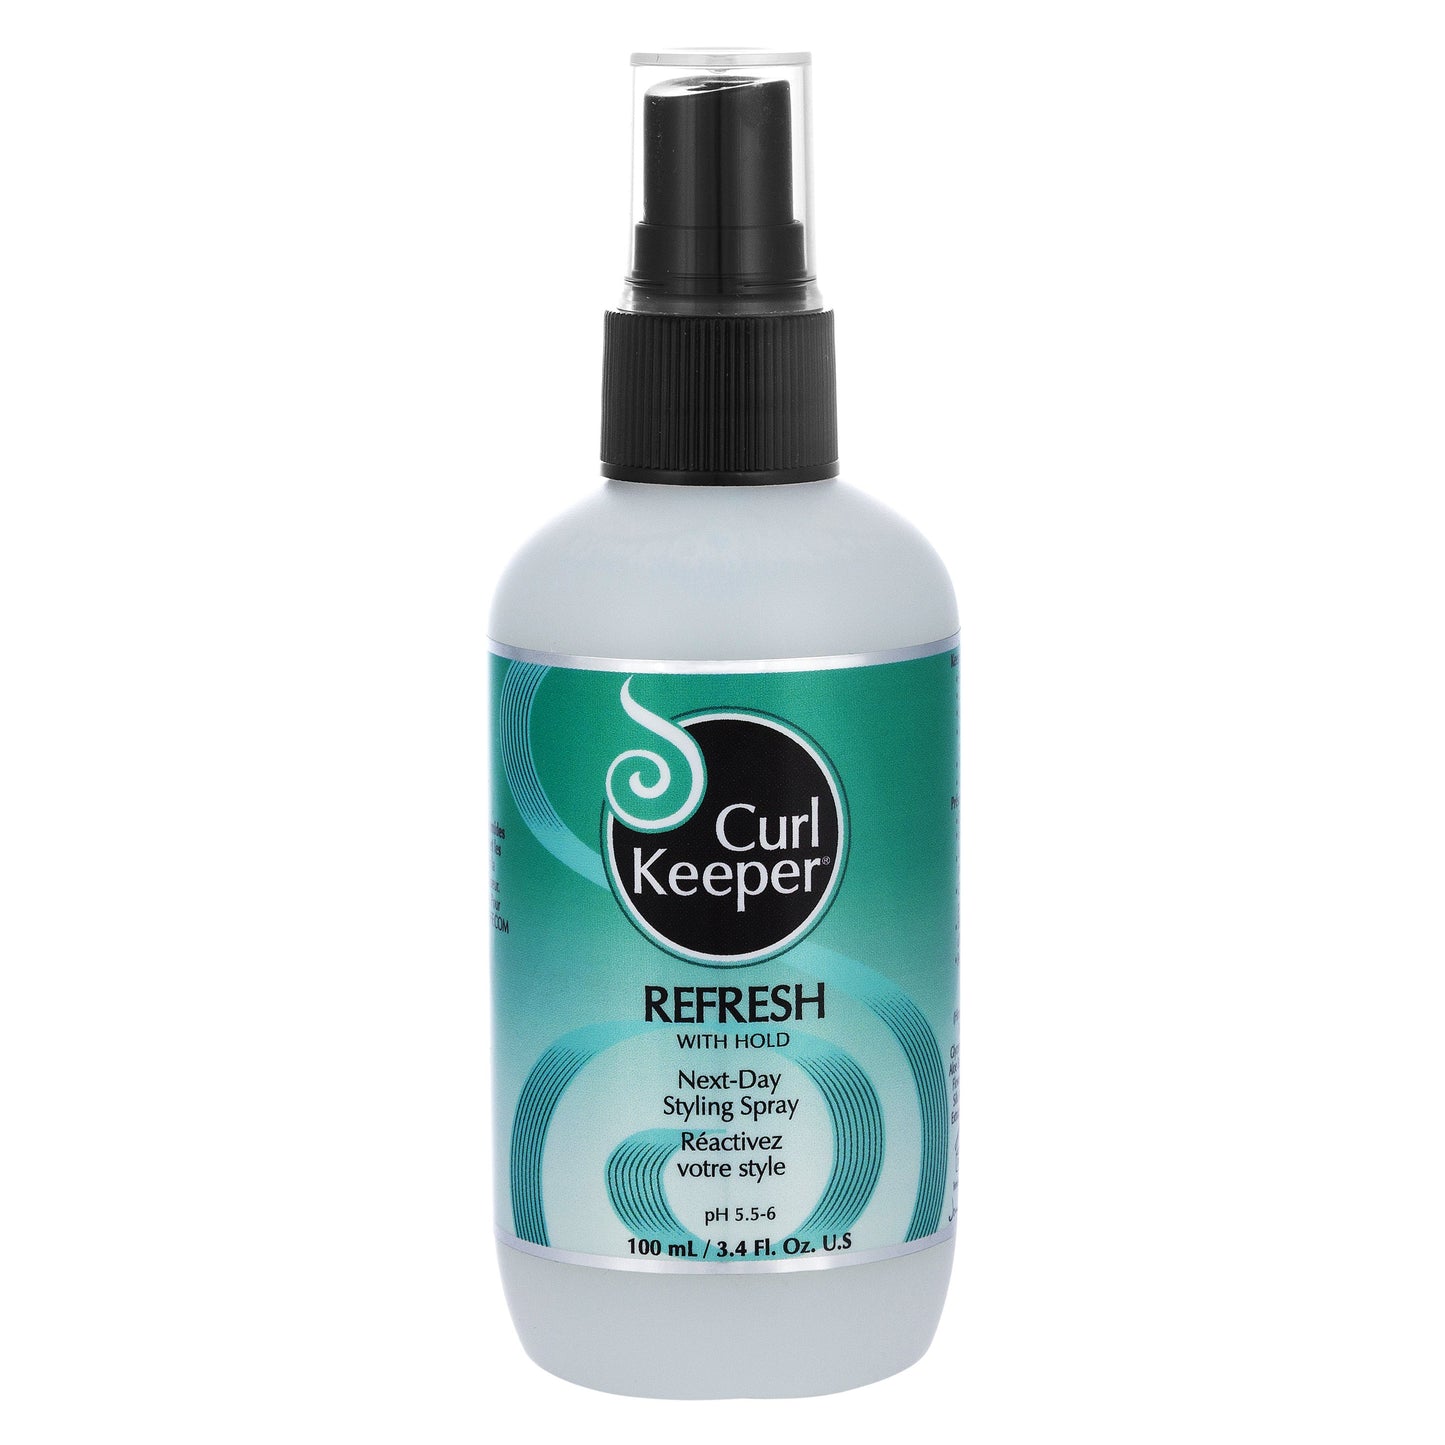 Curl Keeper Refresh "Next Day" Styling Spray